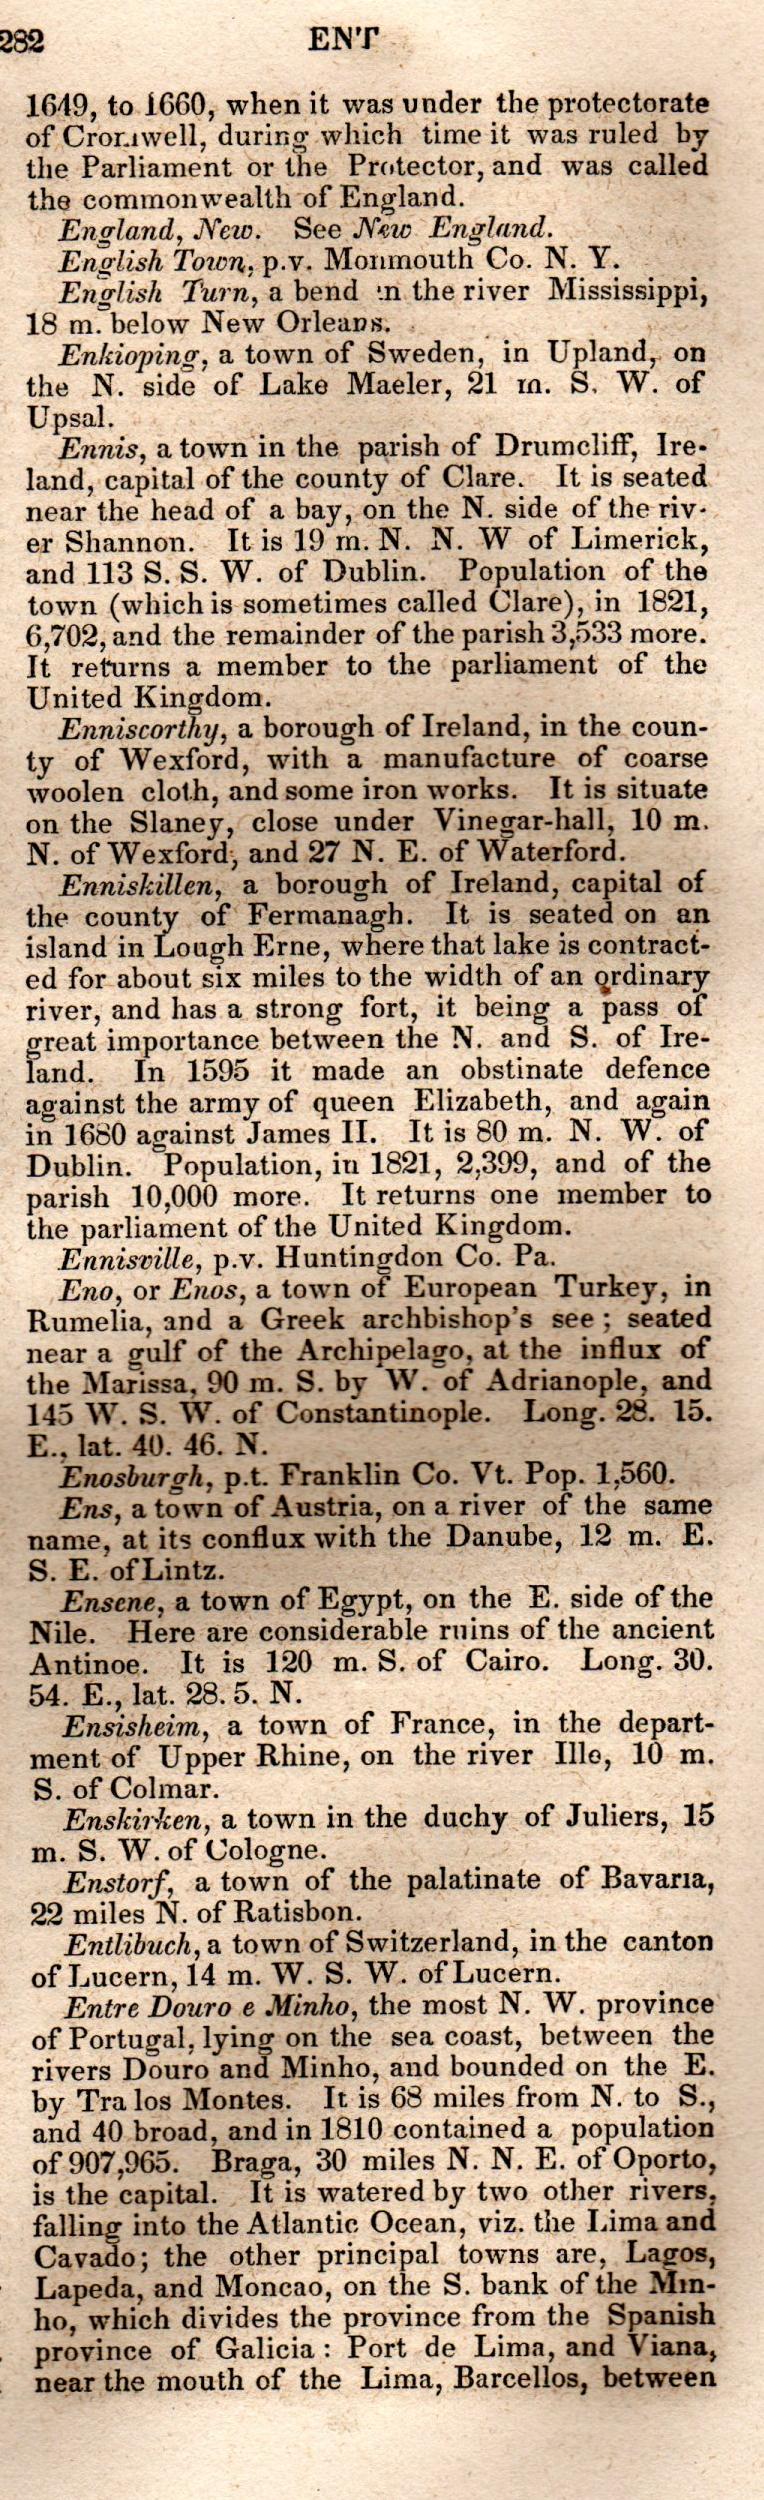 Brookes’ Universal Gazetteer (1850), Page 282 Right Column